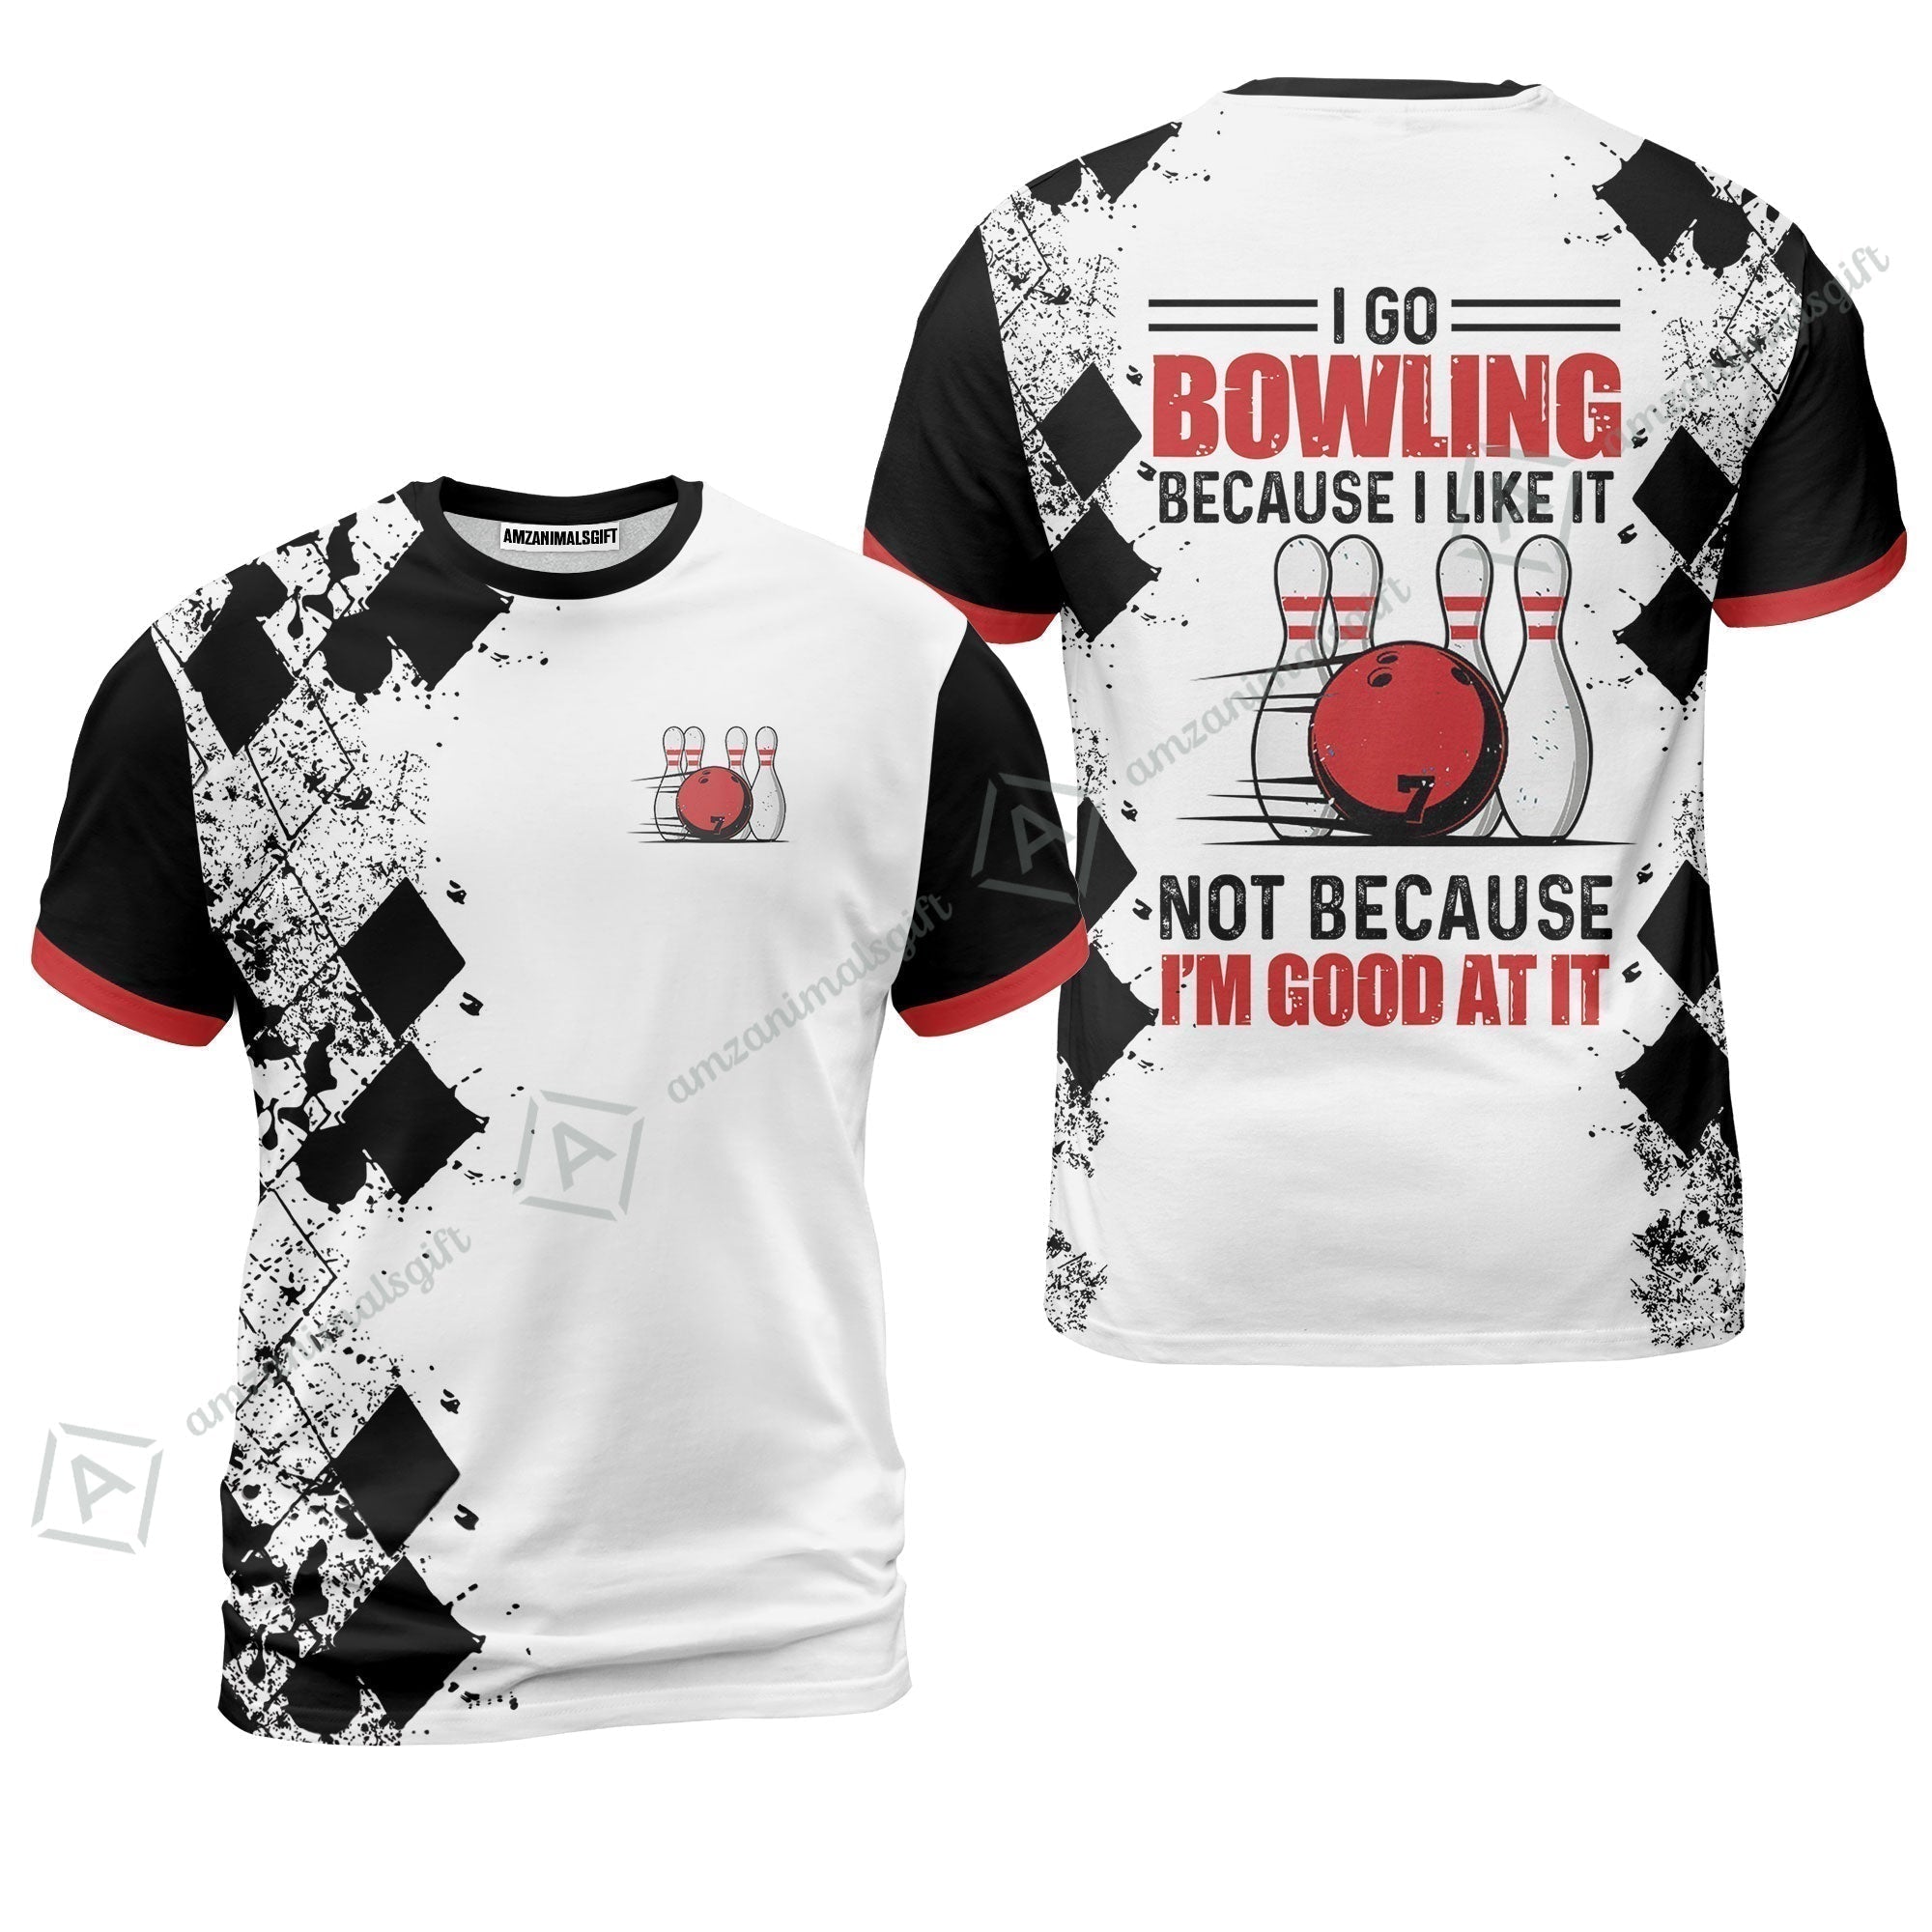 Bowling T-Shirt - I Go Bowling Because I Like It T-Shirt, Black Argyle Pattern Shirt Design, Best Bowling Shirt